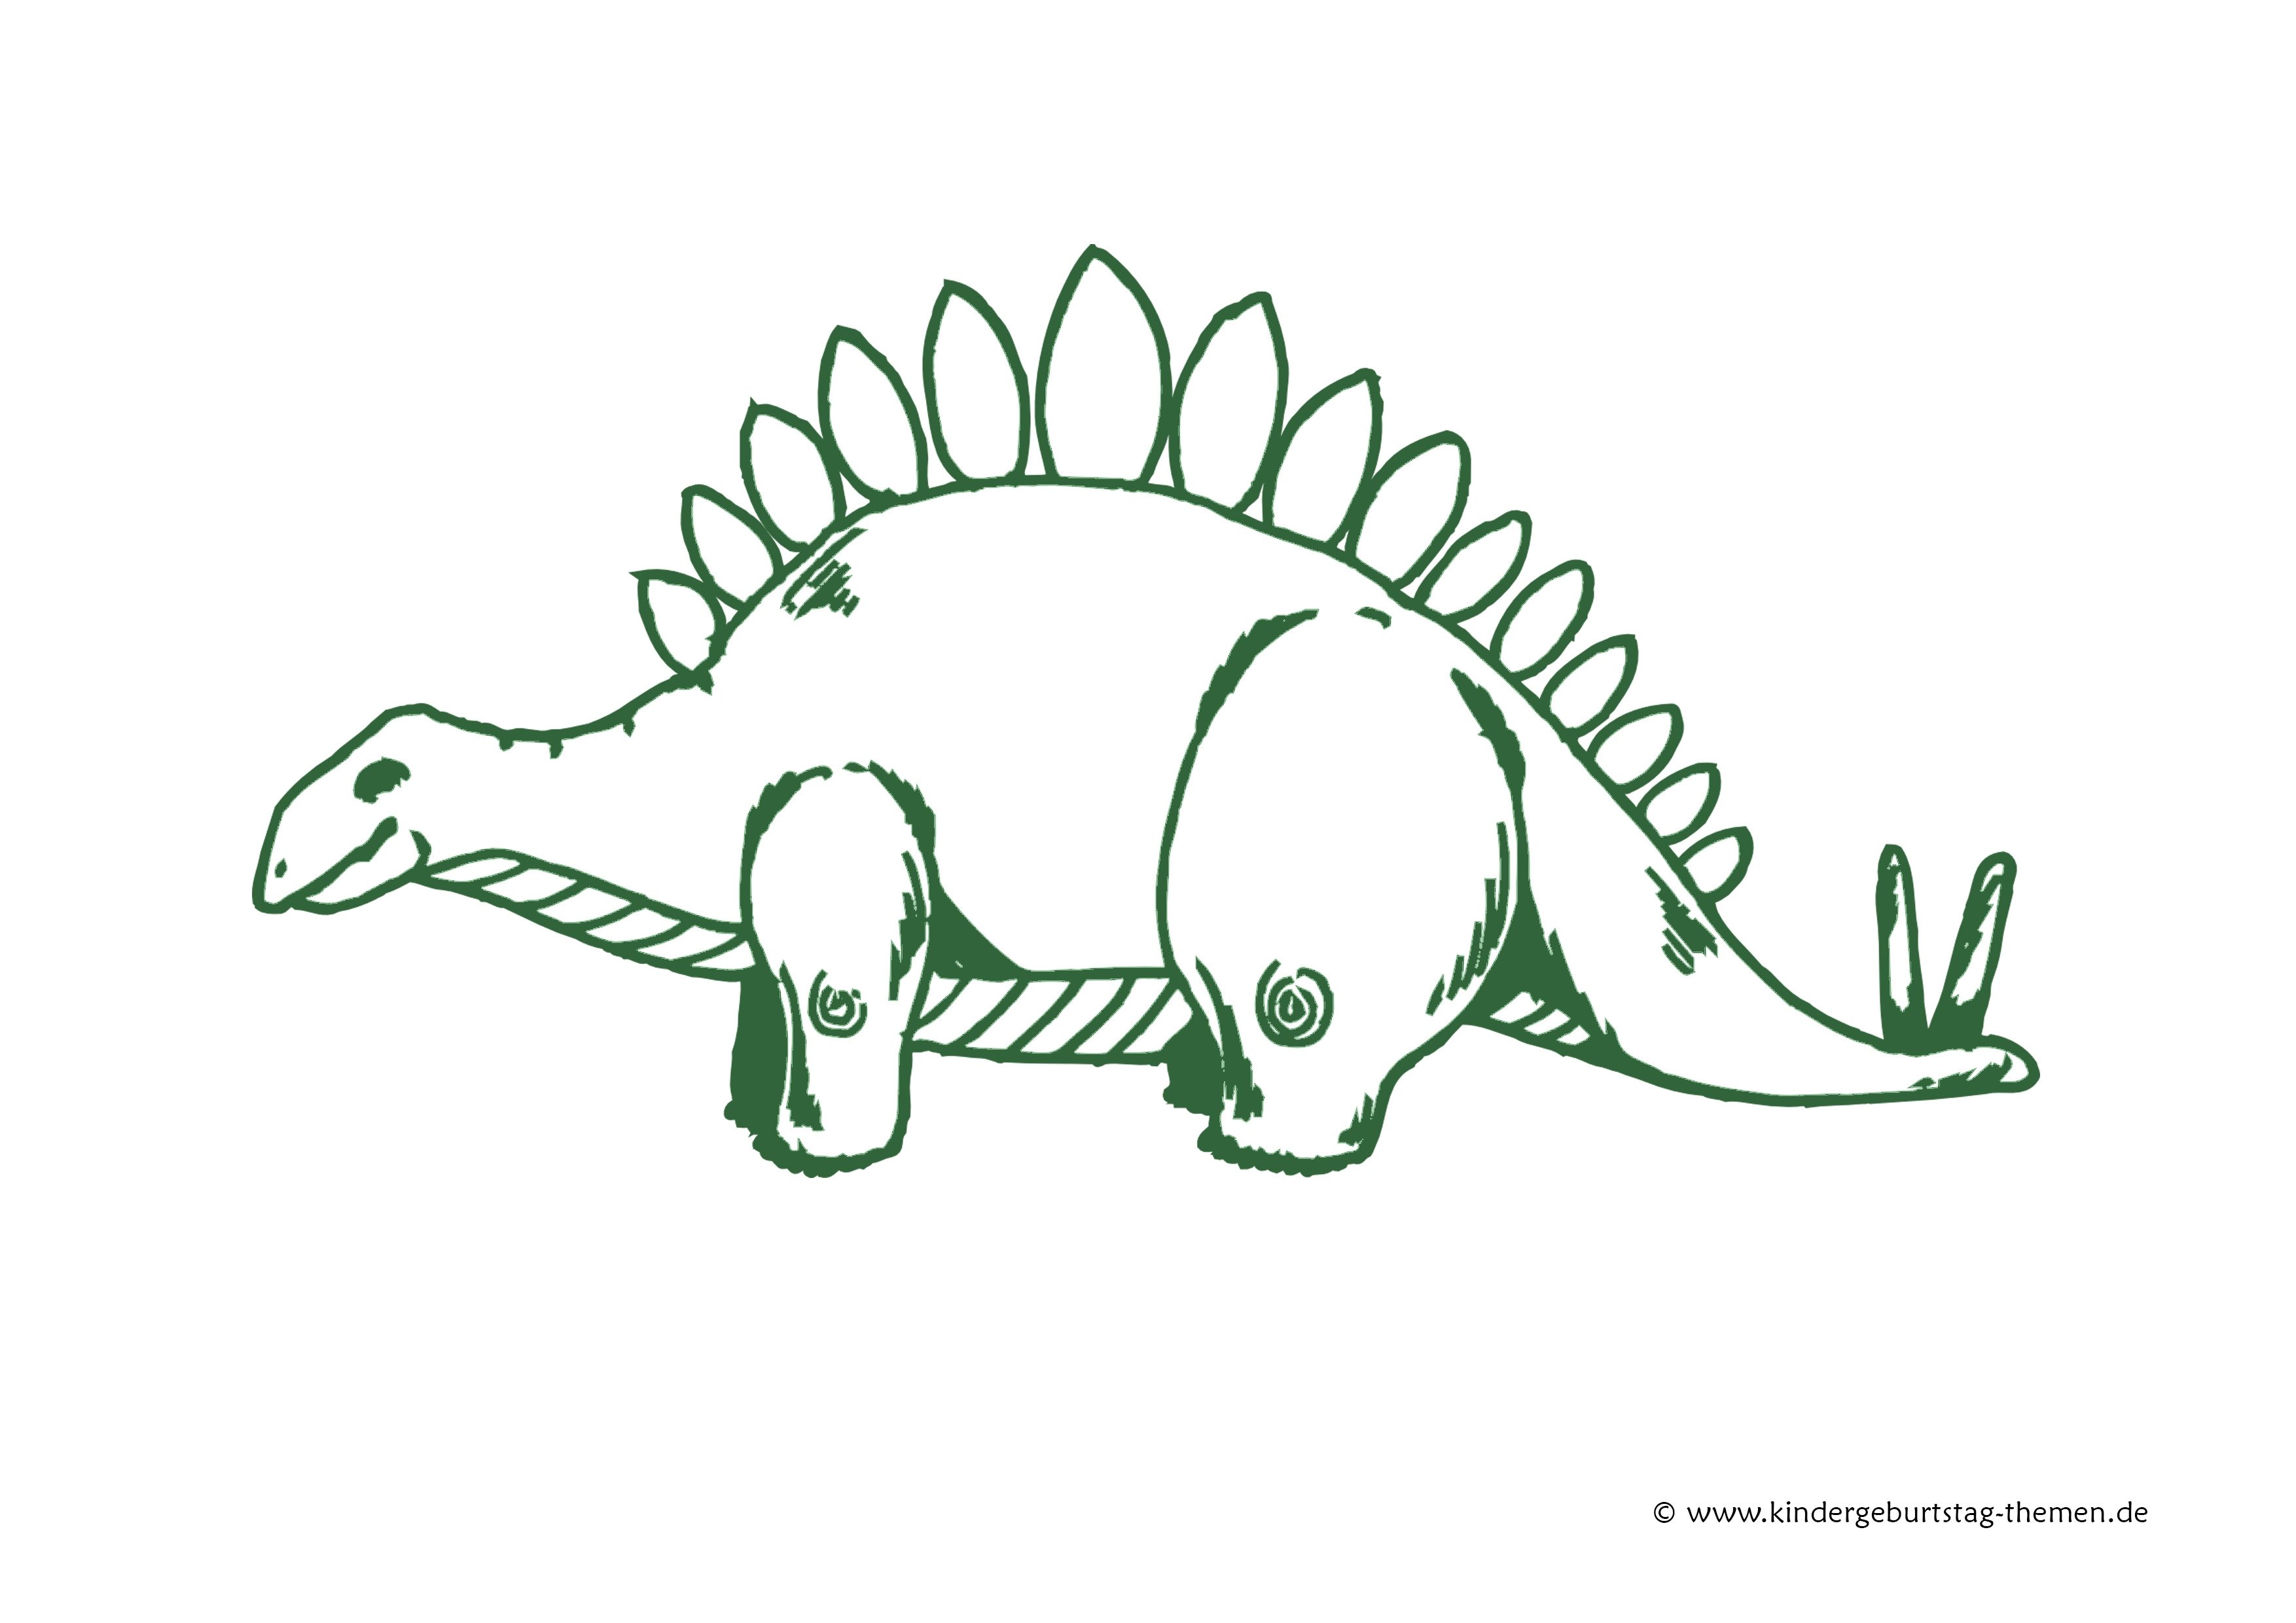 Стегозавр карандашом